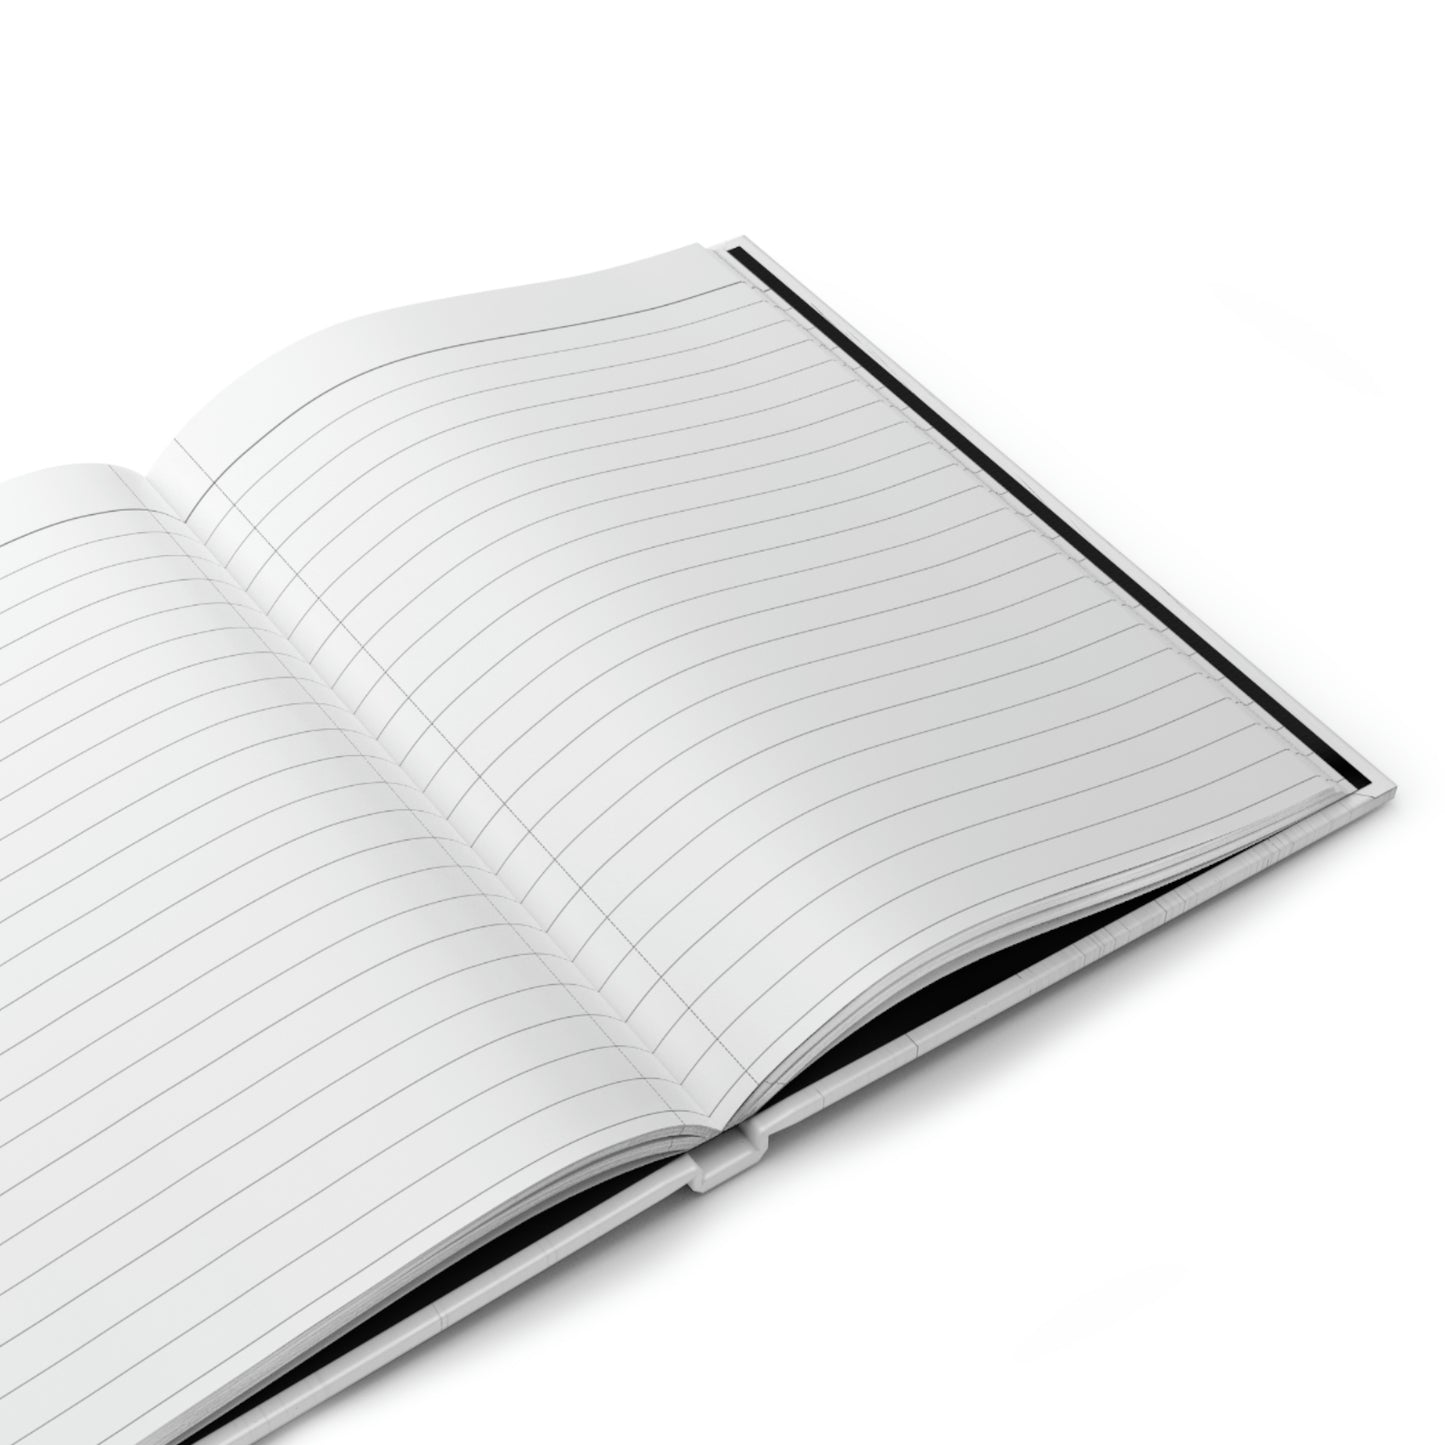 Simple Love Notebook Book Hardcover Journal Matte